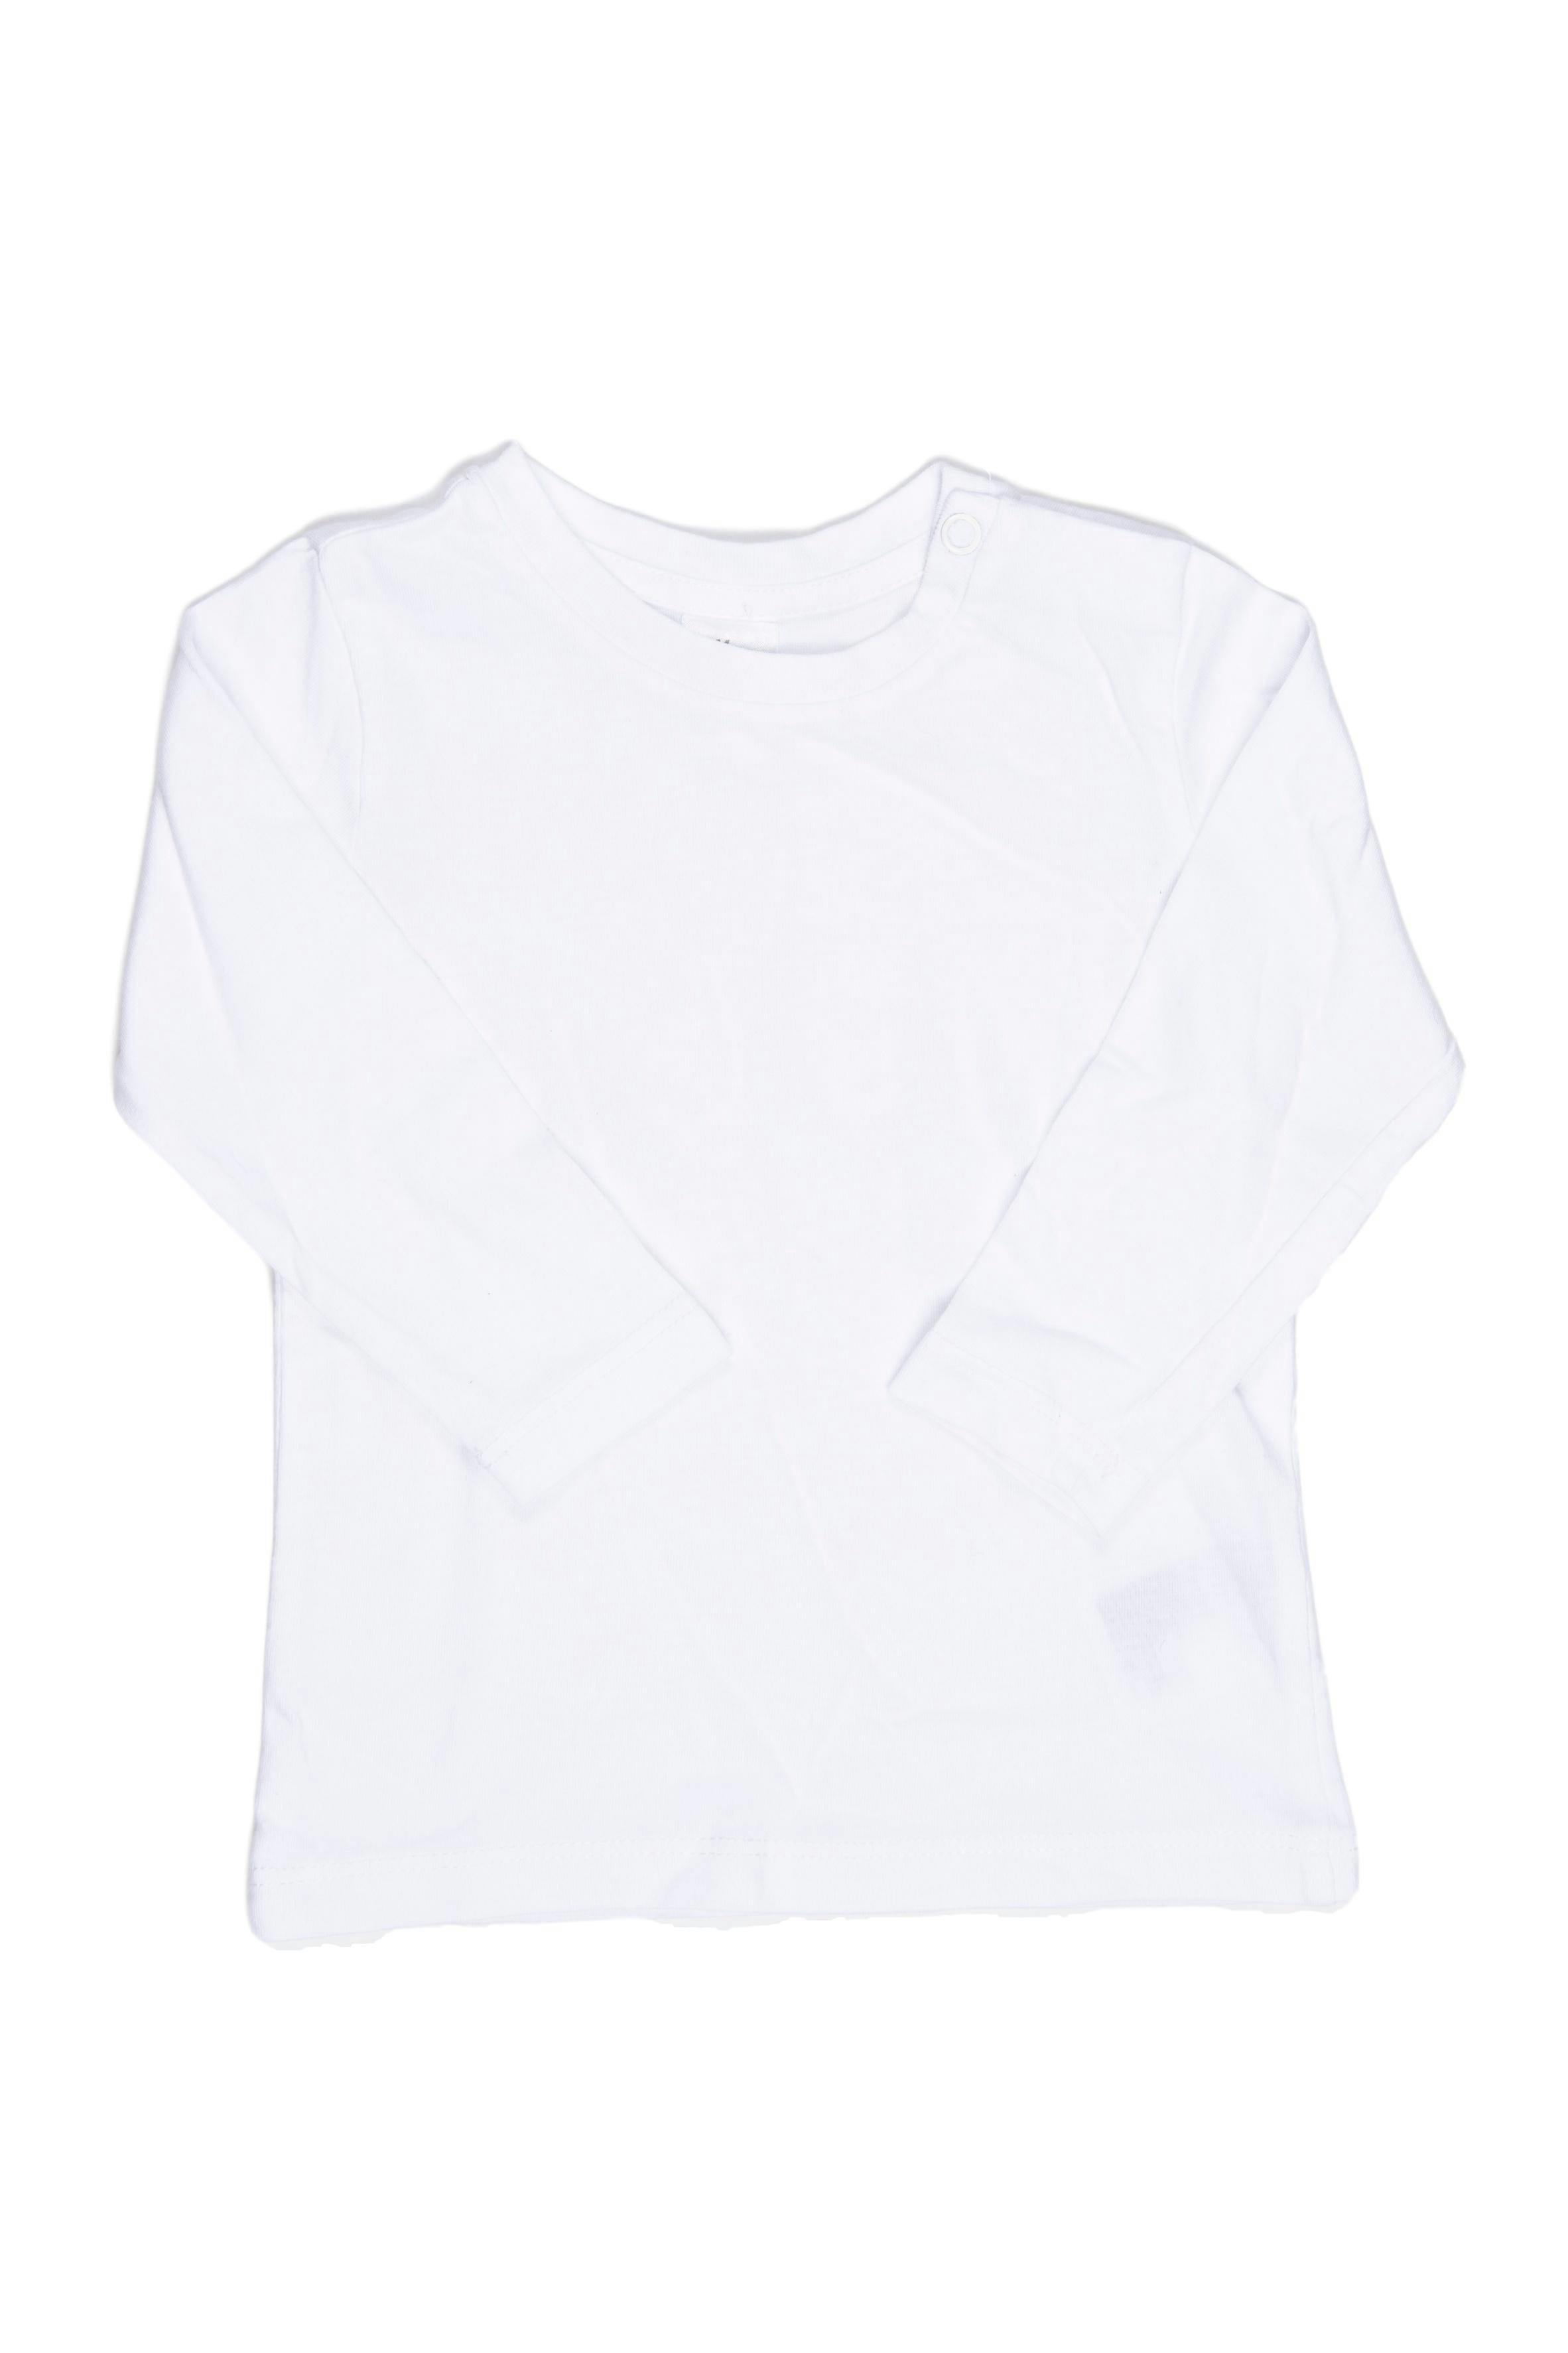 Polo blanco basico manga larga 100% algodón - H & M